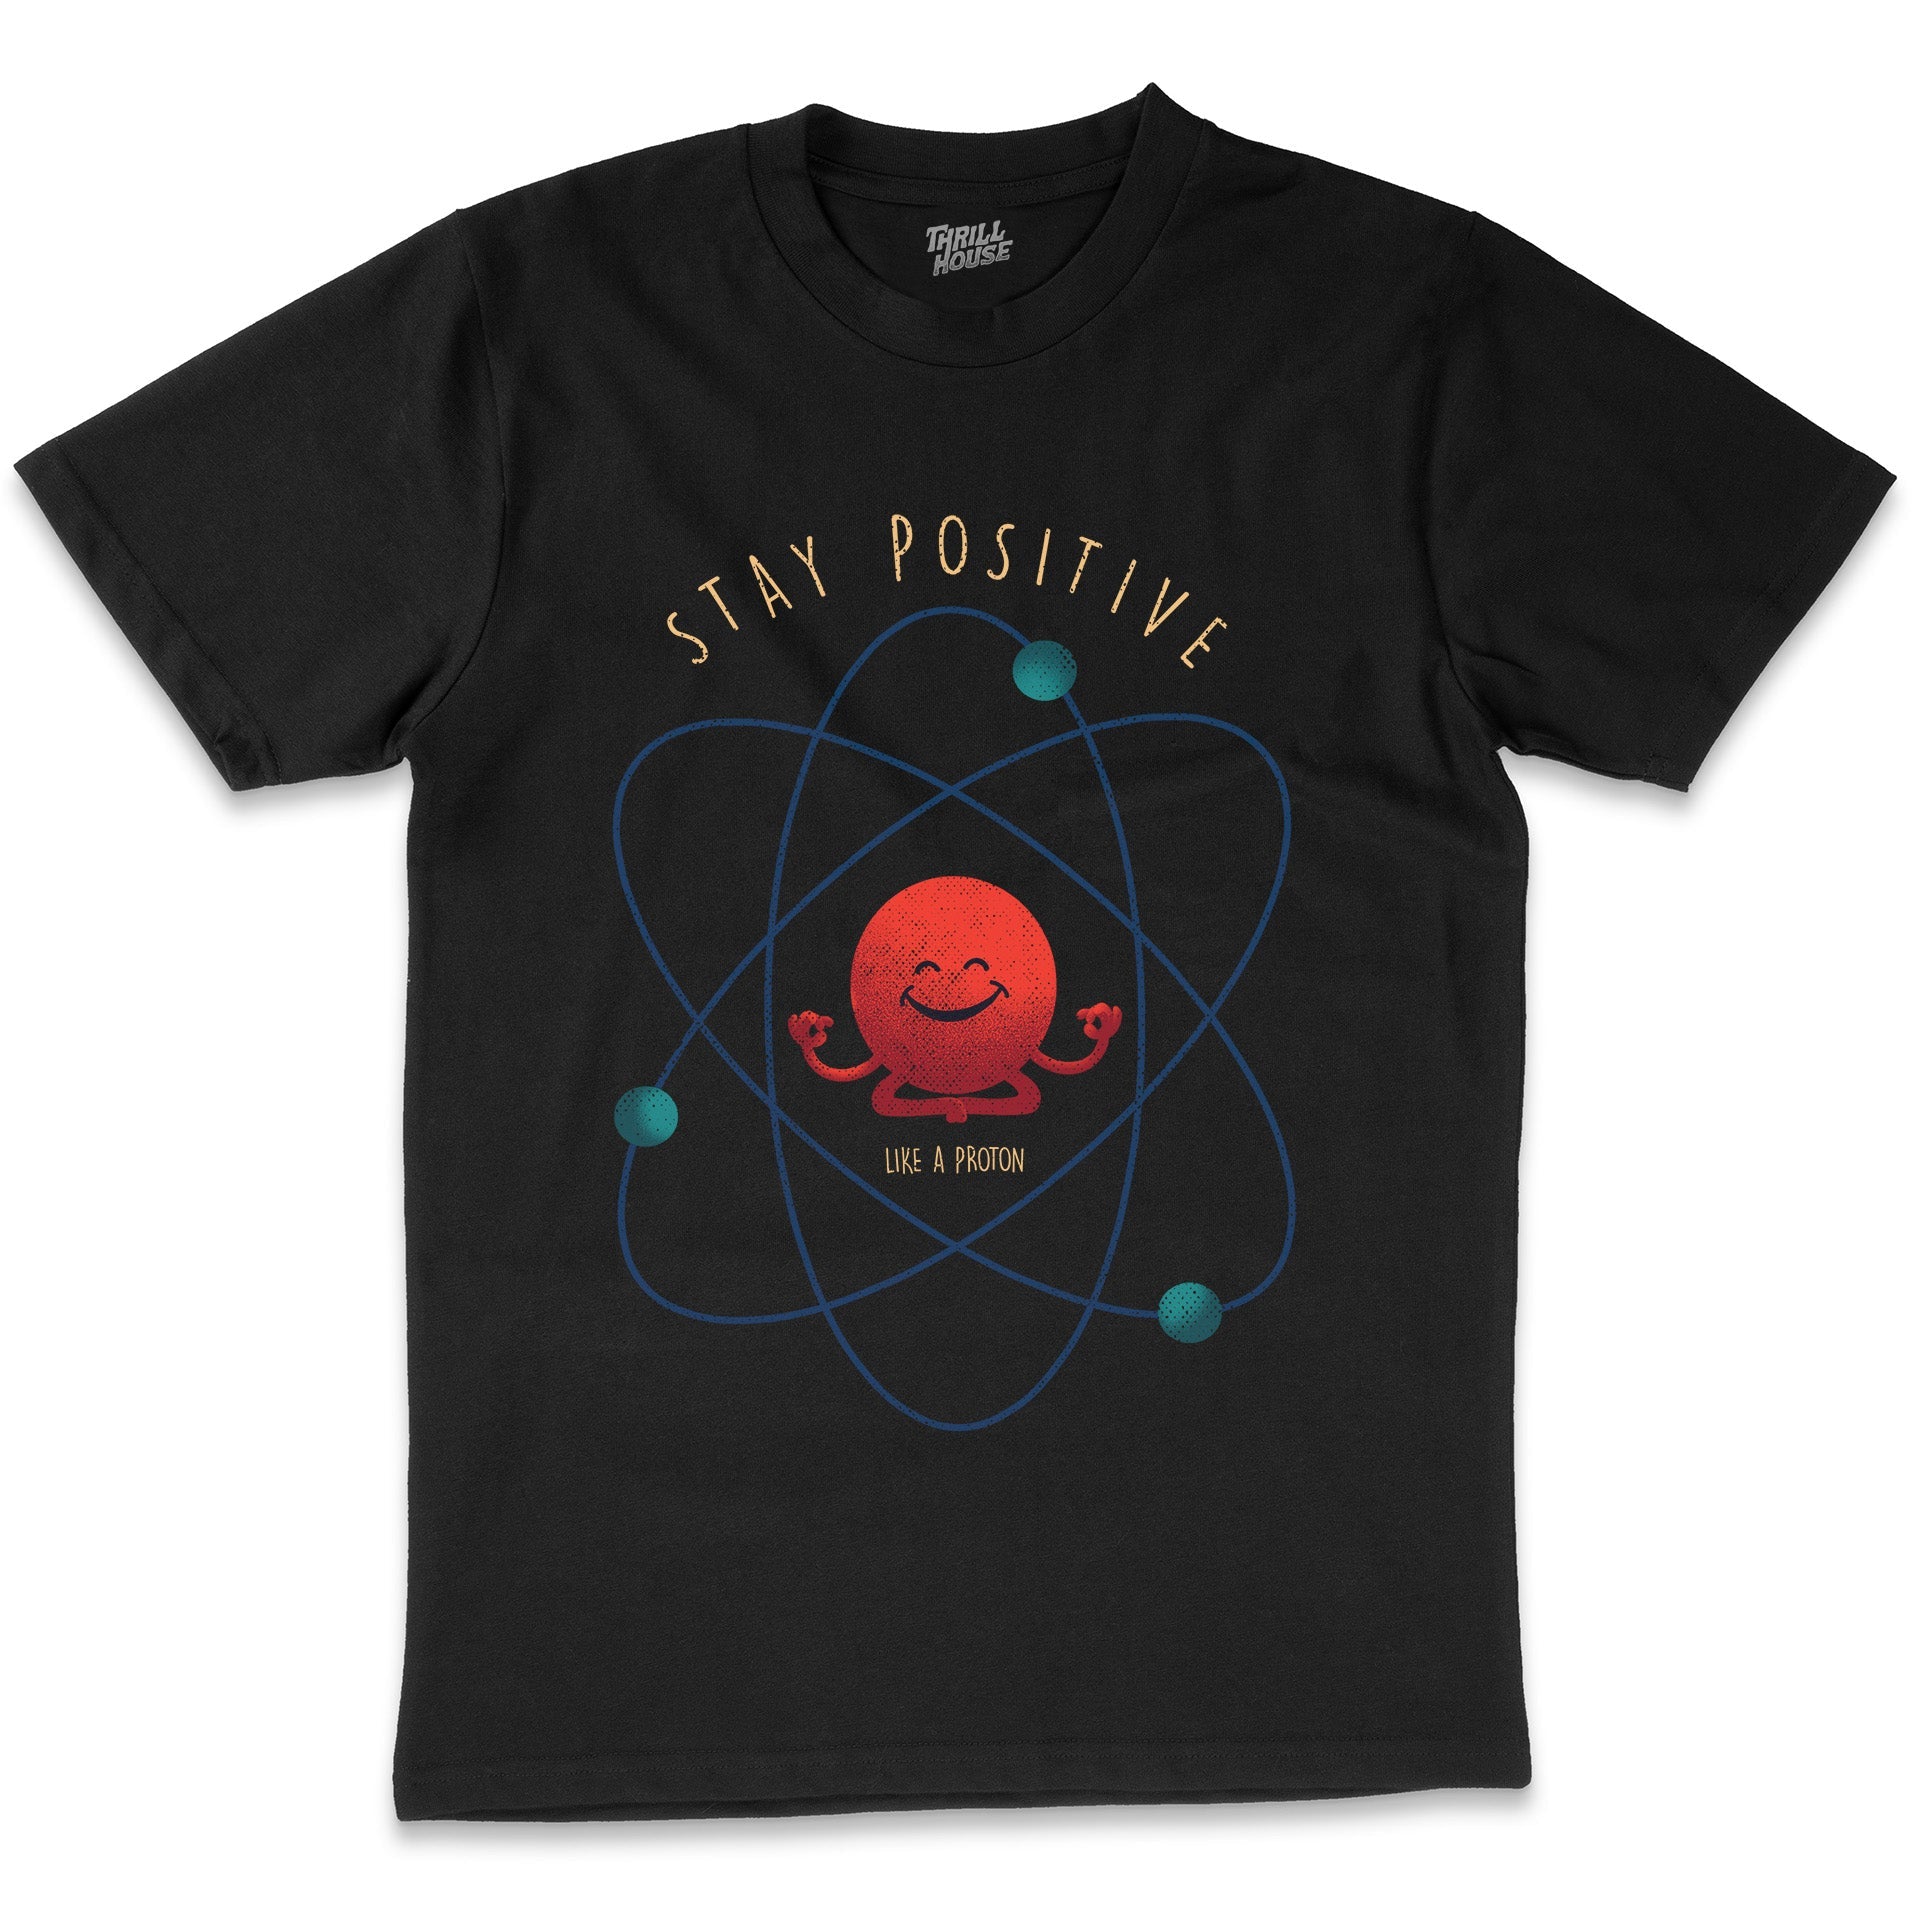 Stay Positive - Atom Science Geek Nerd Chemistry Physics Laboratory Funny Slogan Cotton T-Shirt